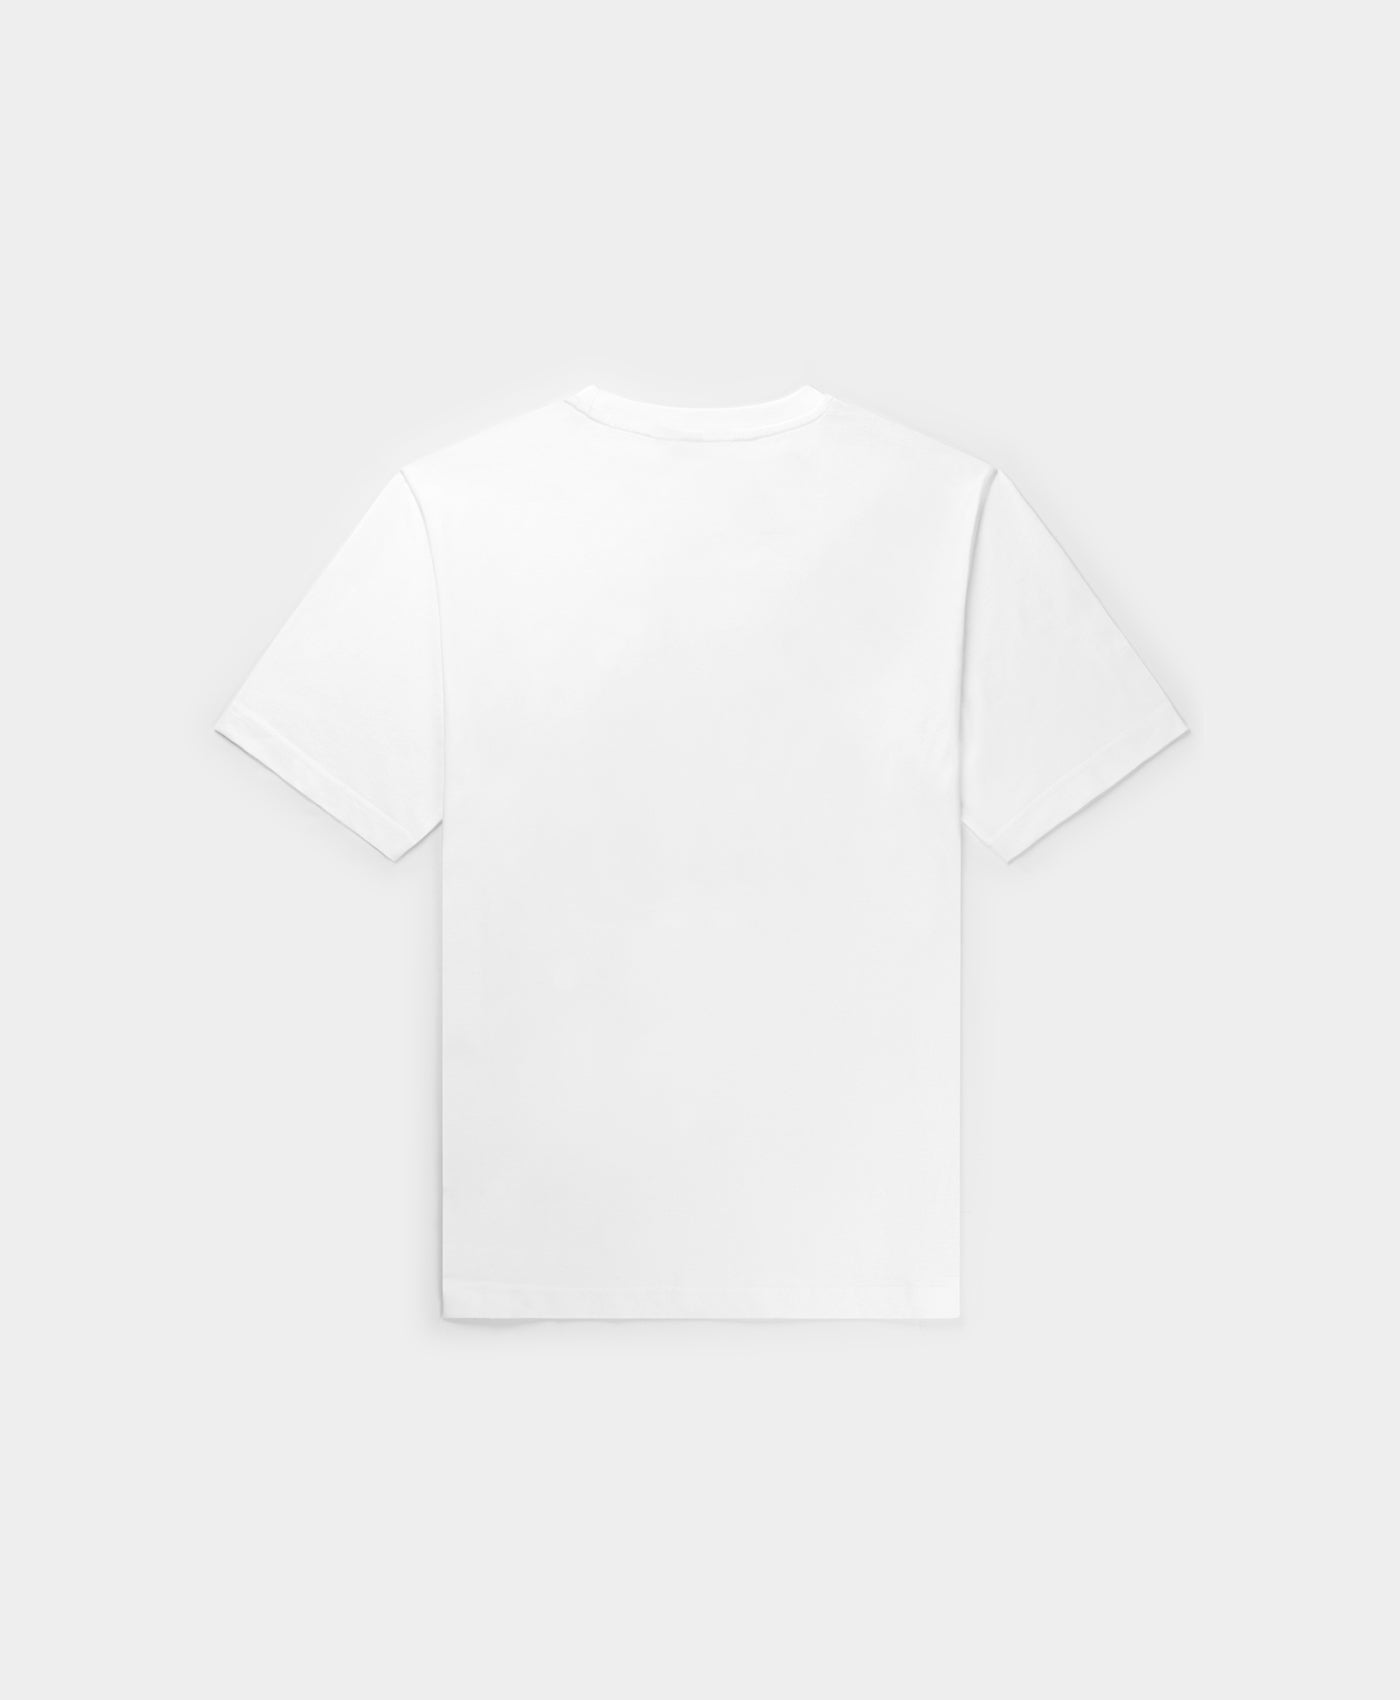 DP - White Panyin T-Shirt - Packshot - Rear